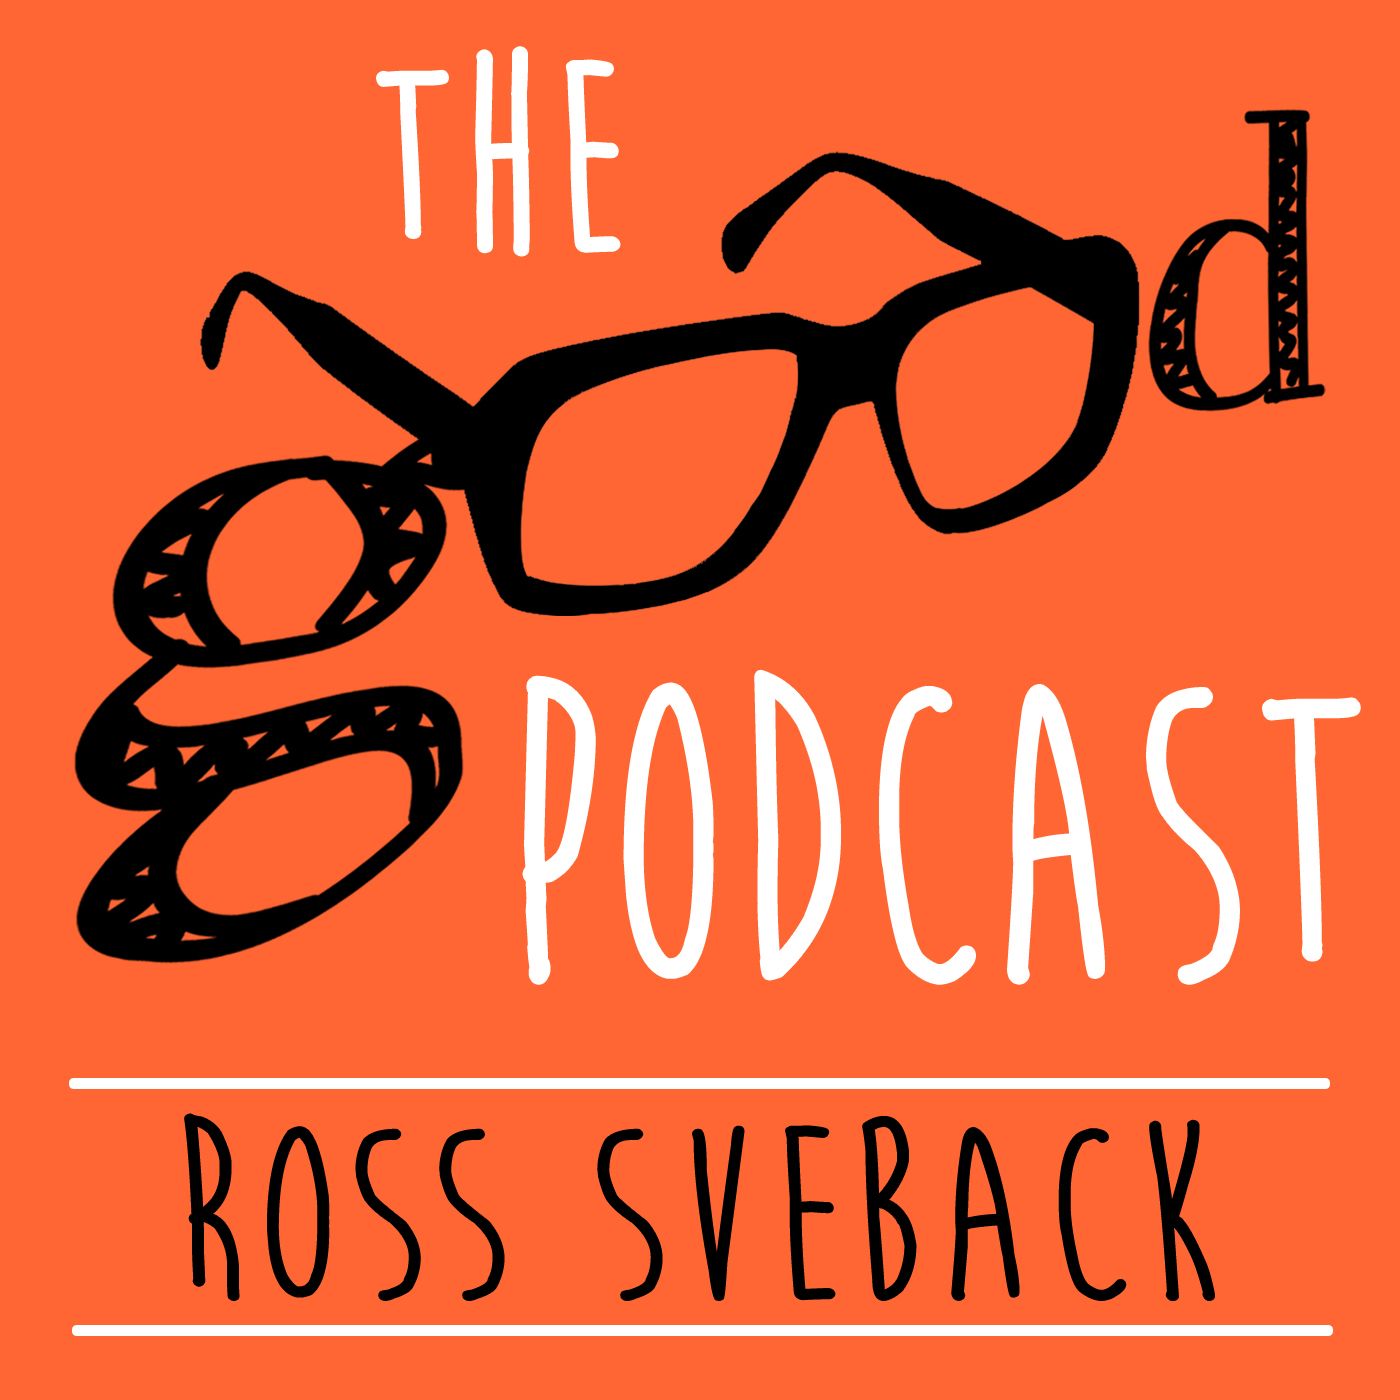 The Good Podcast | Listen via Stitcher for Podcasts